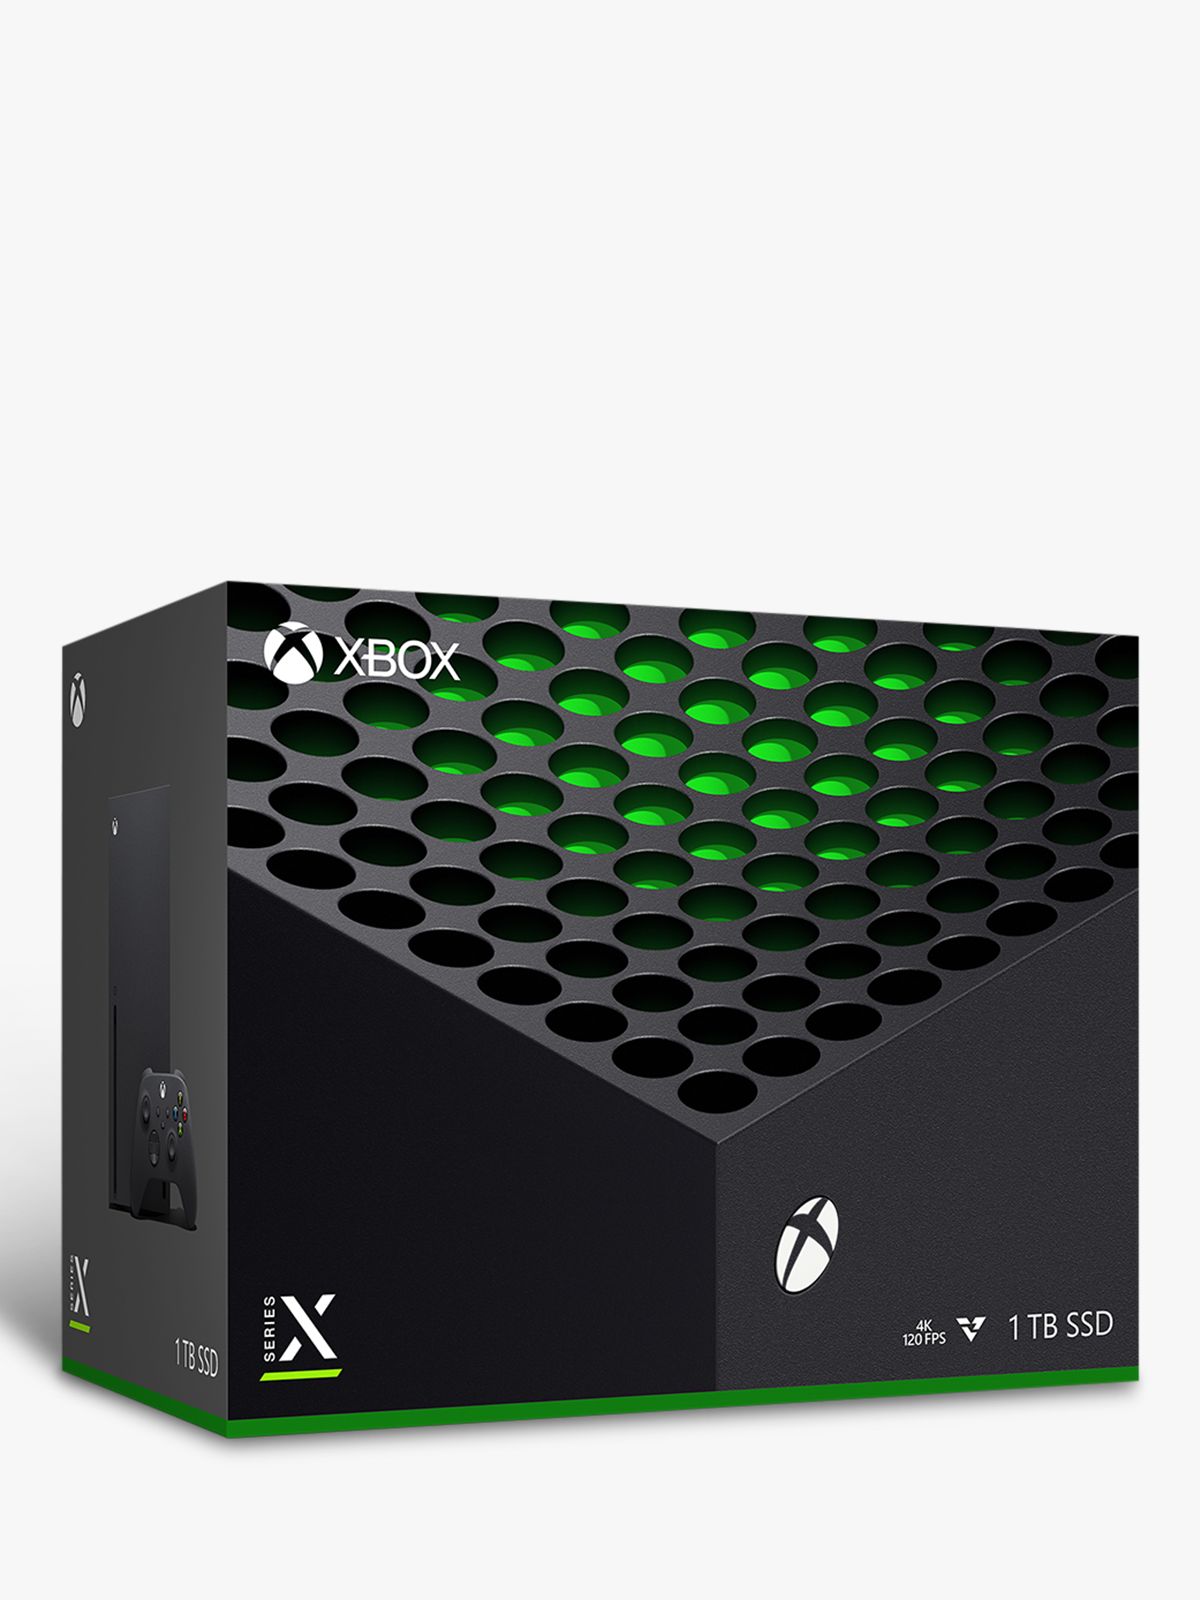  Xbox Series X 1TB SSD Console - Includes Wireless